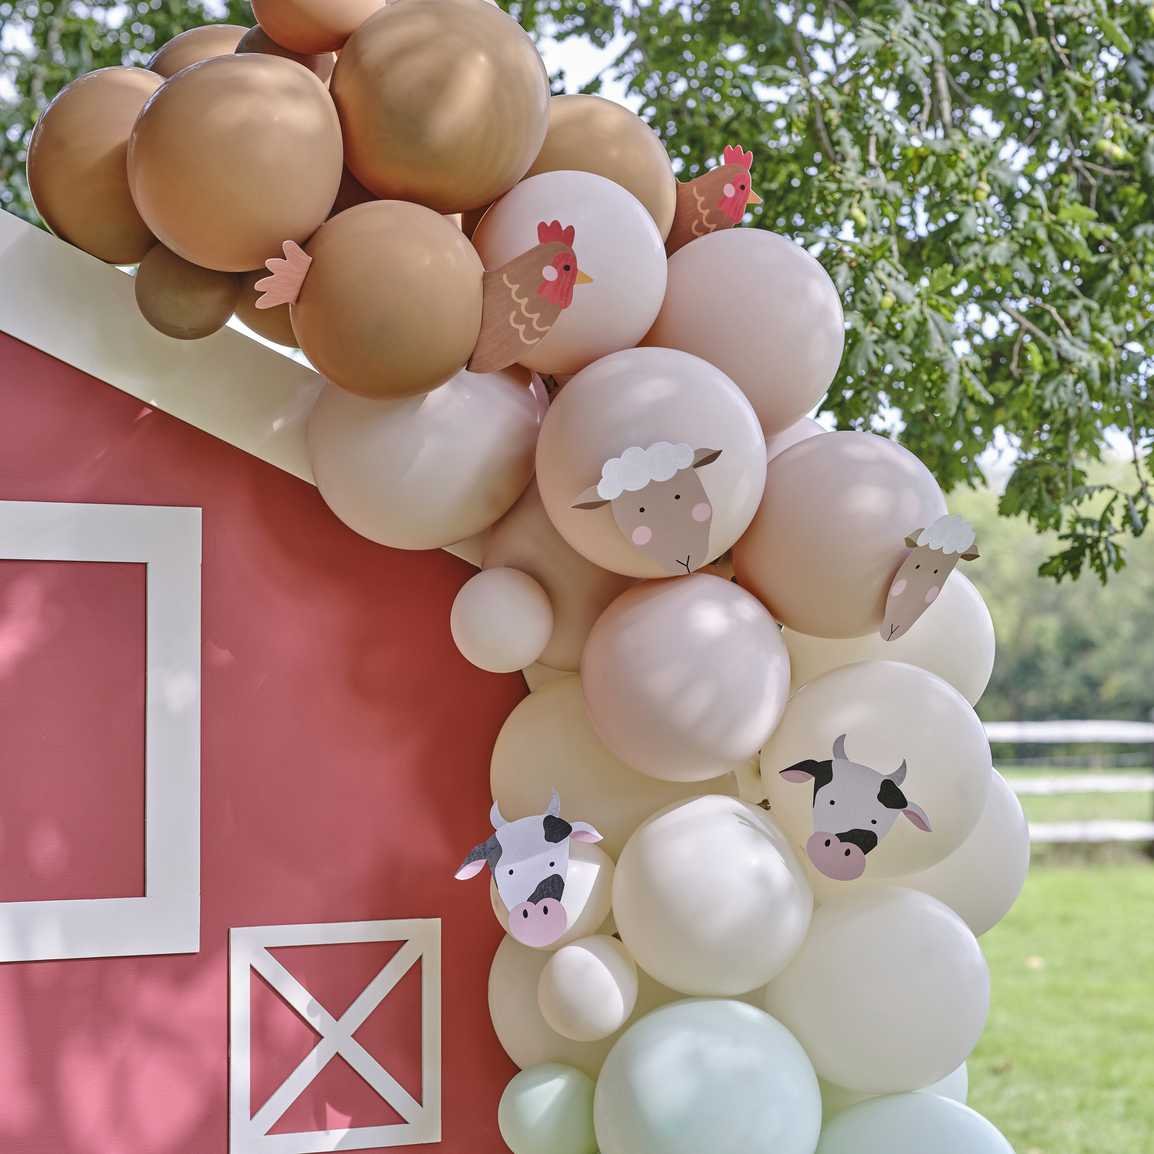 Farm Friends Balloon Arch Kit with 10 Cardboard Animal Faces